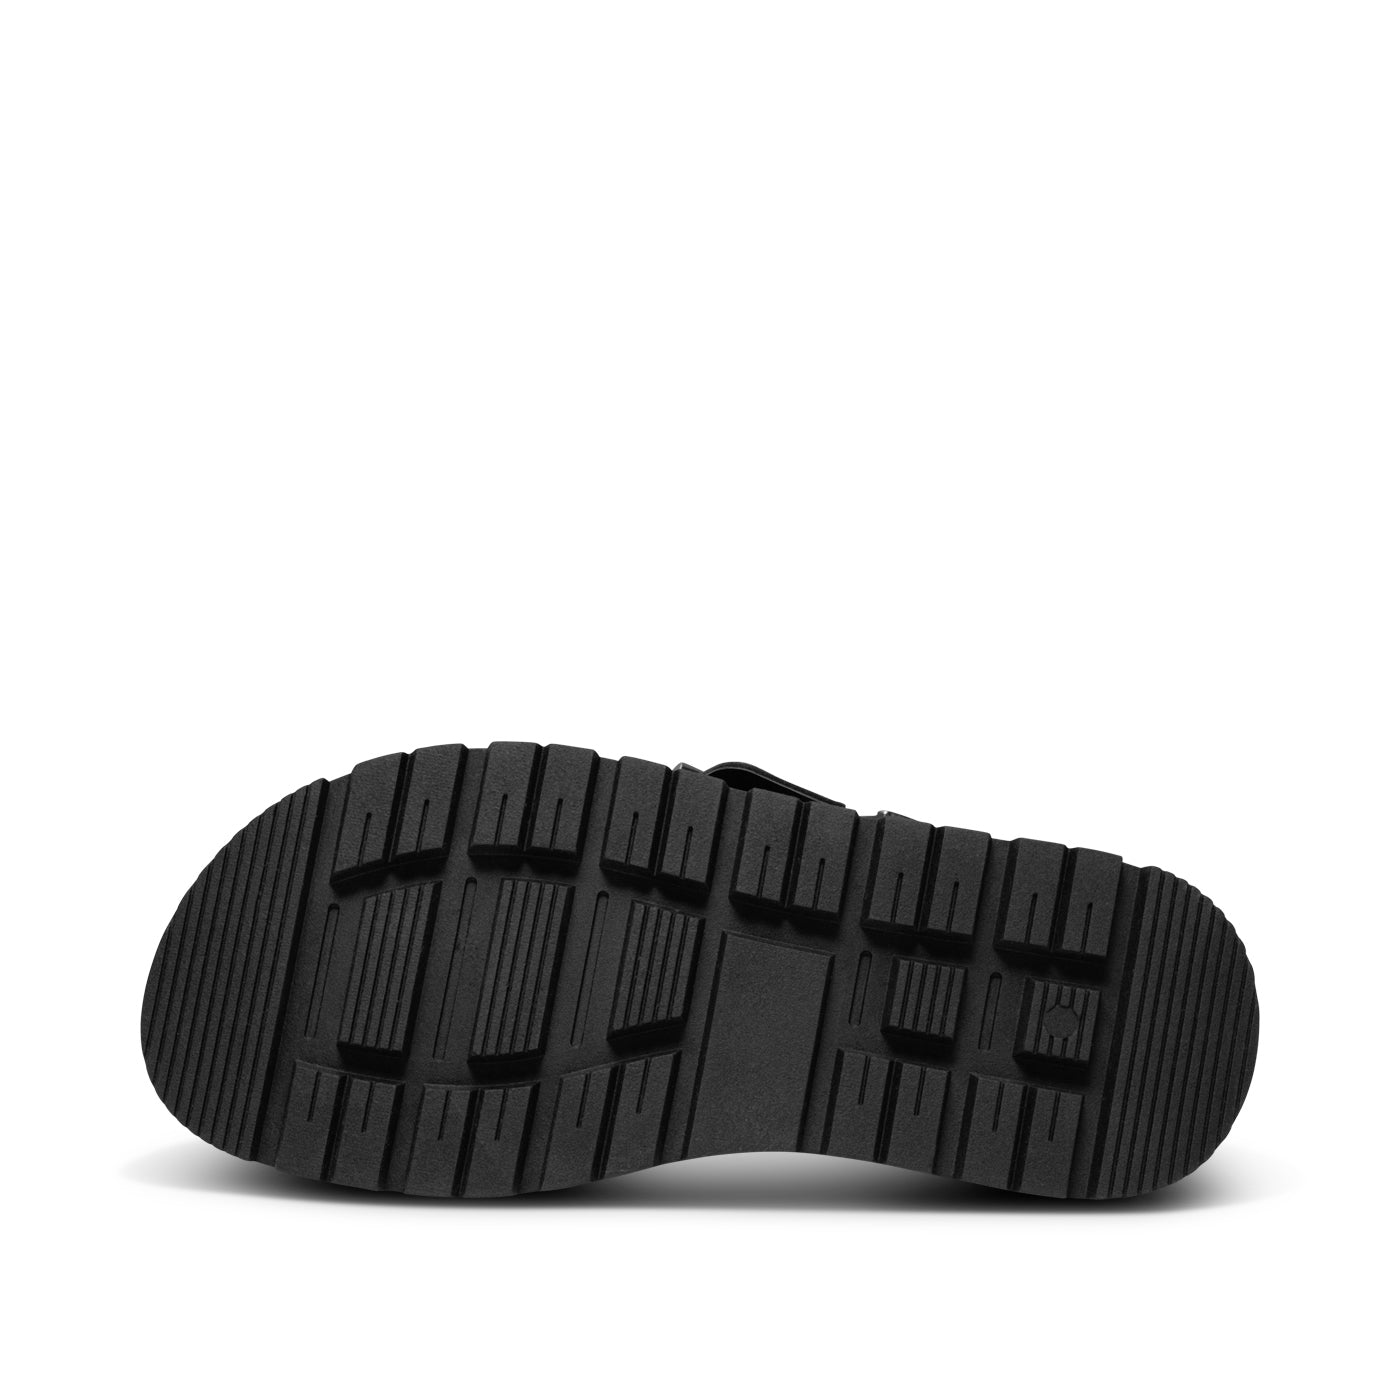 SHOE THE BEAR WOMENS Rebecca Buckle Leather Sandal Sandals 110 BLACK